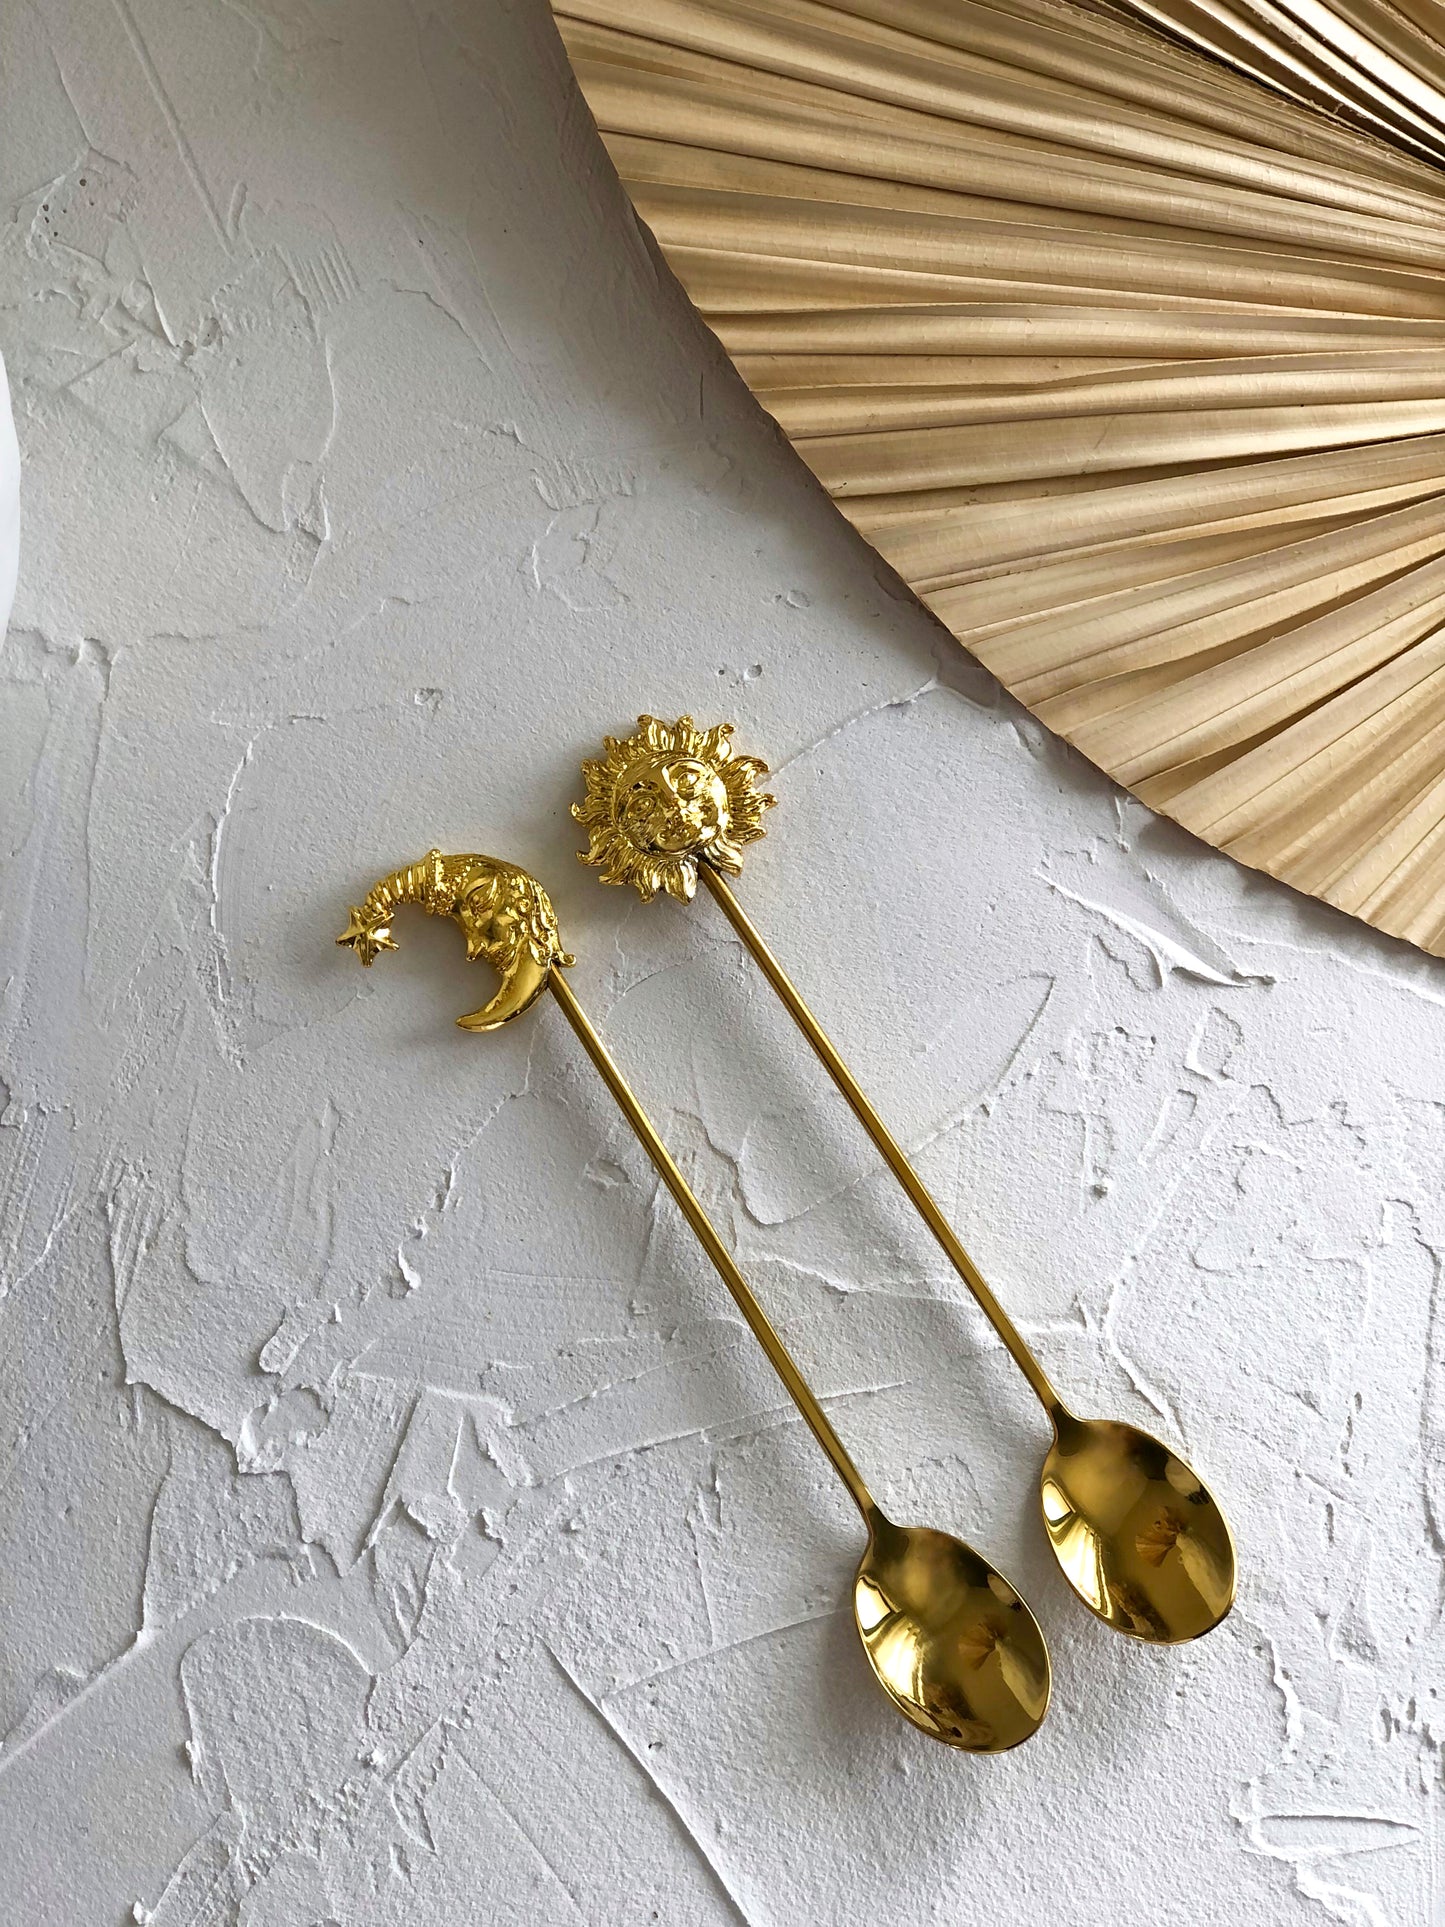 Sun Spoon - Gold